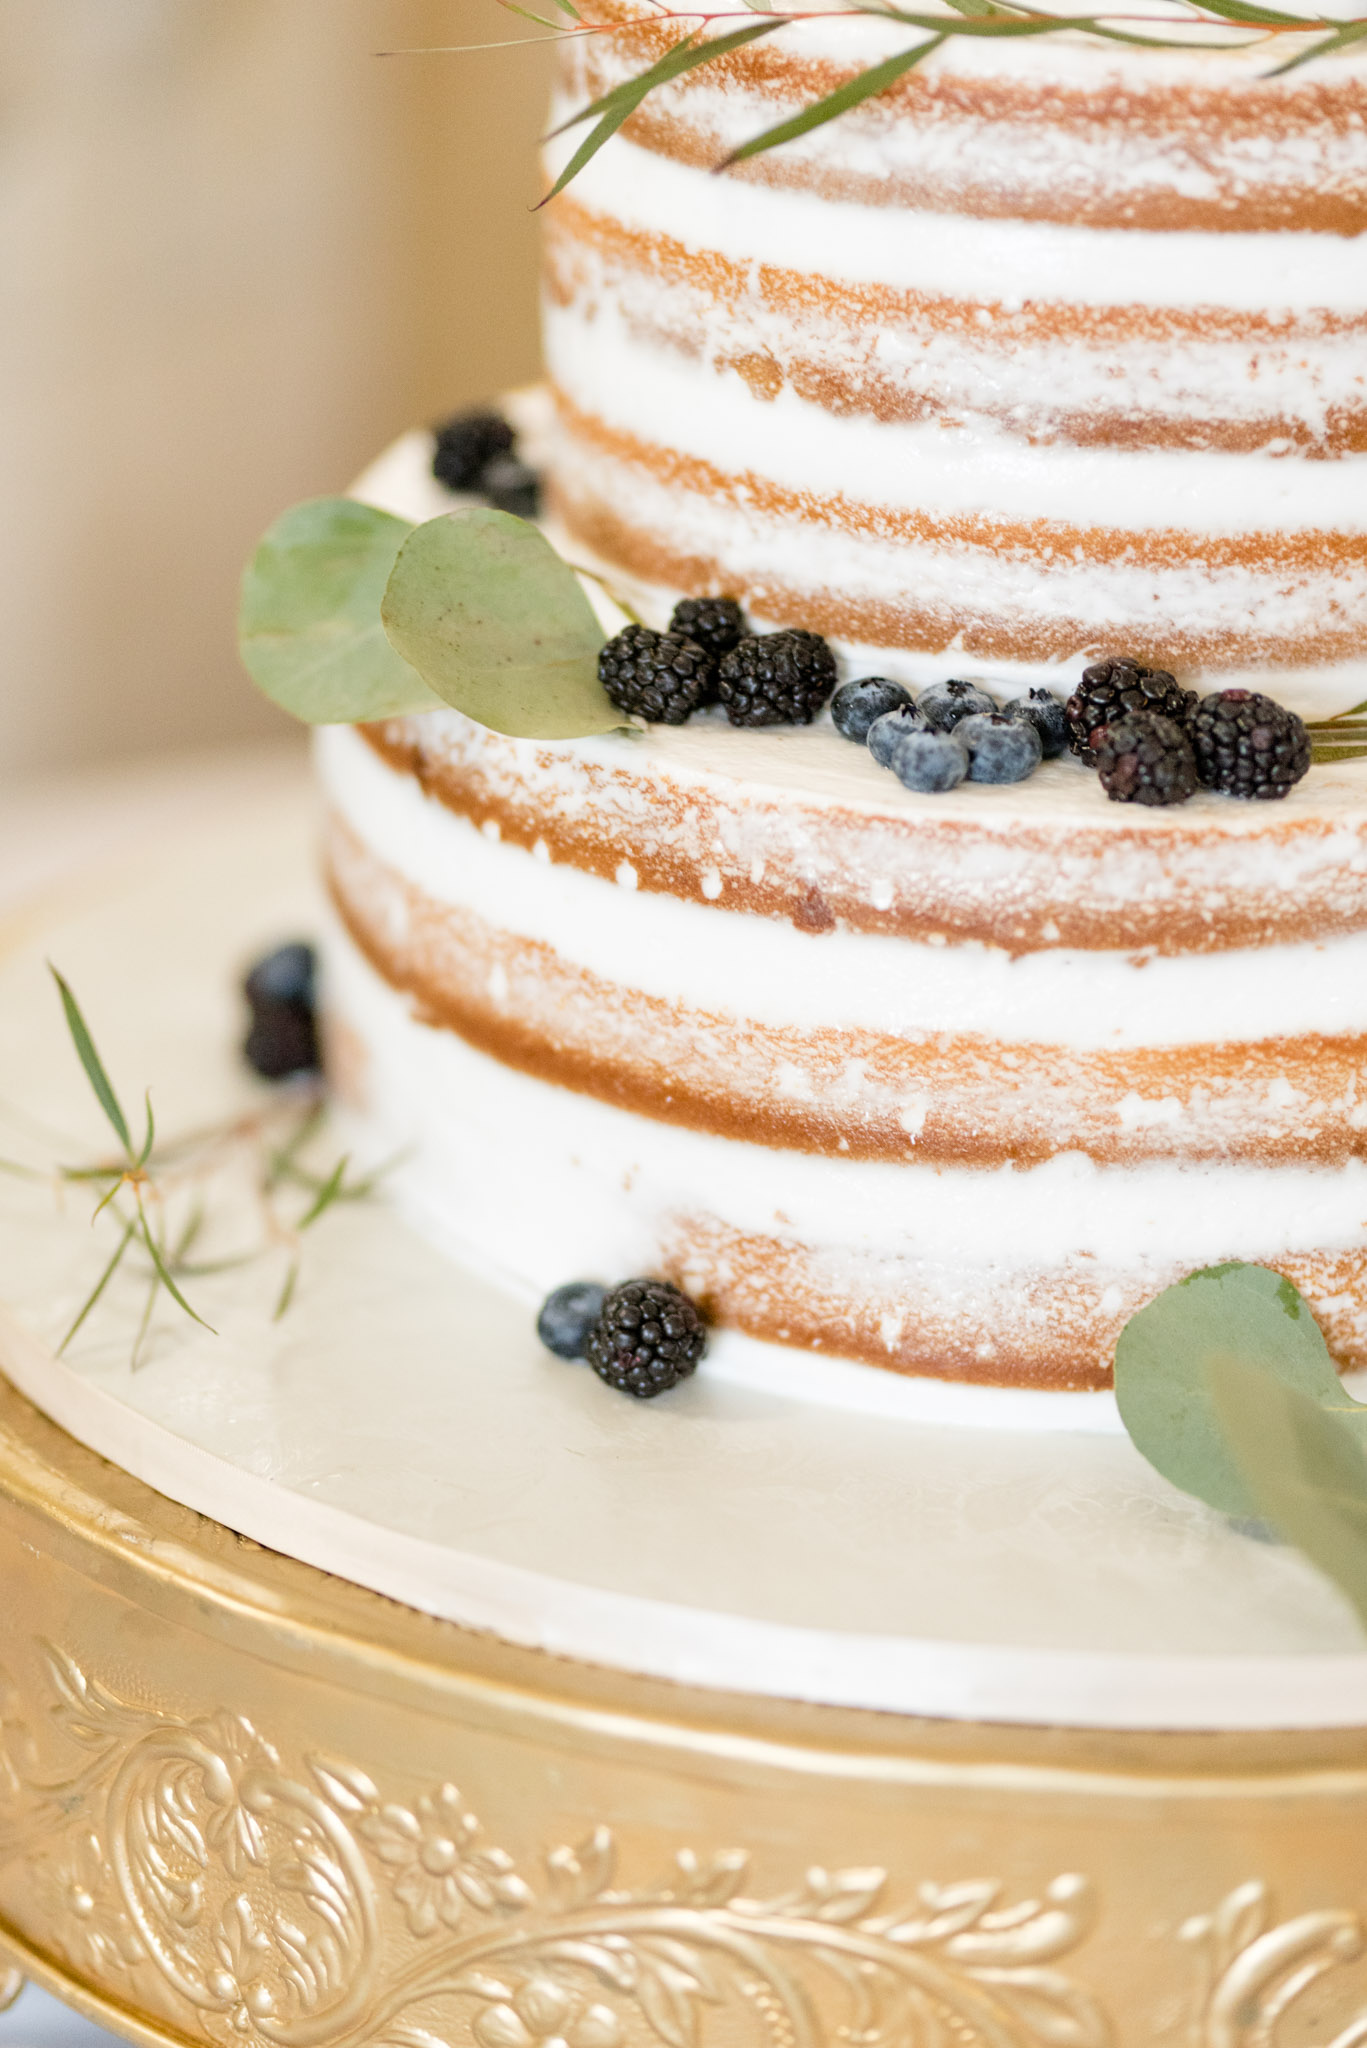 Blackberries and blueberries on wedding cake.